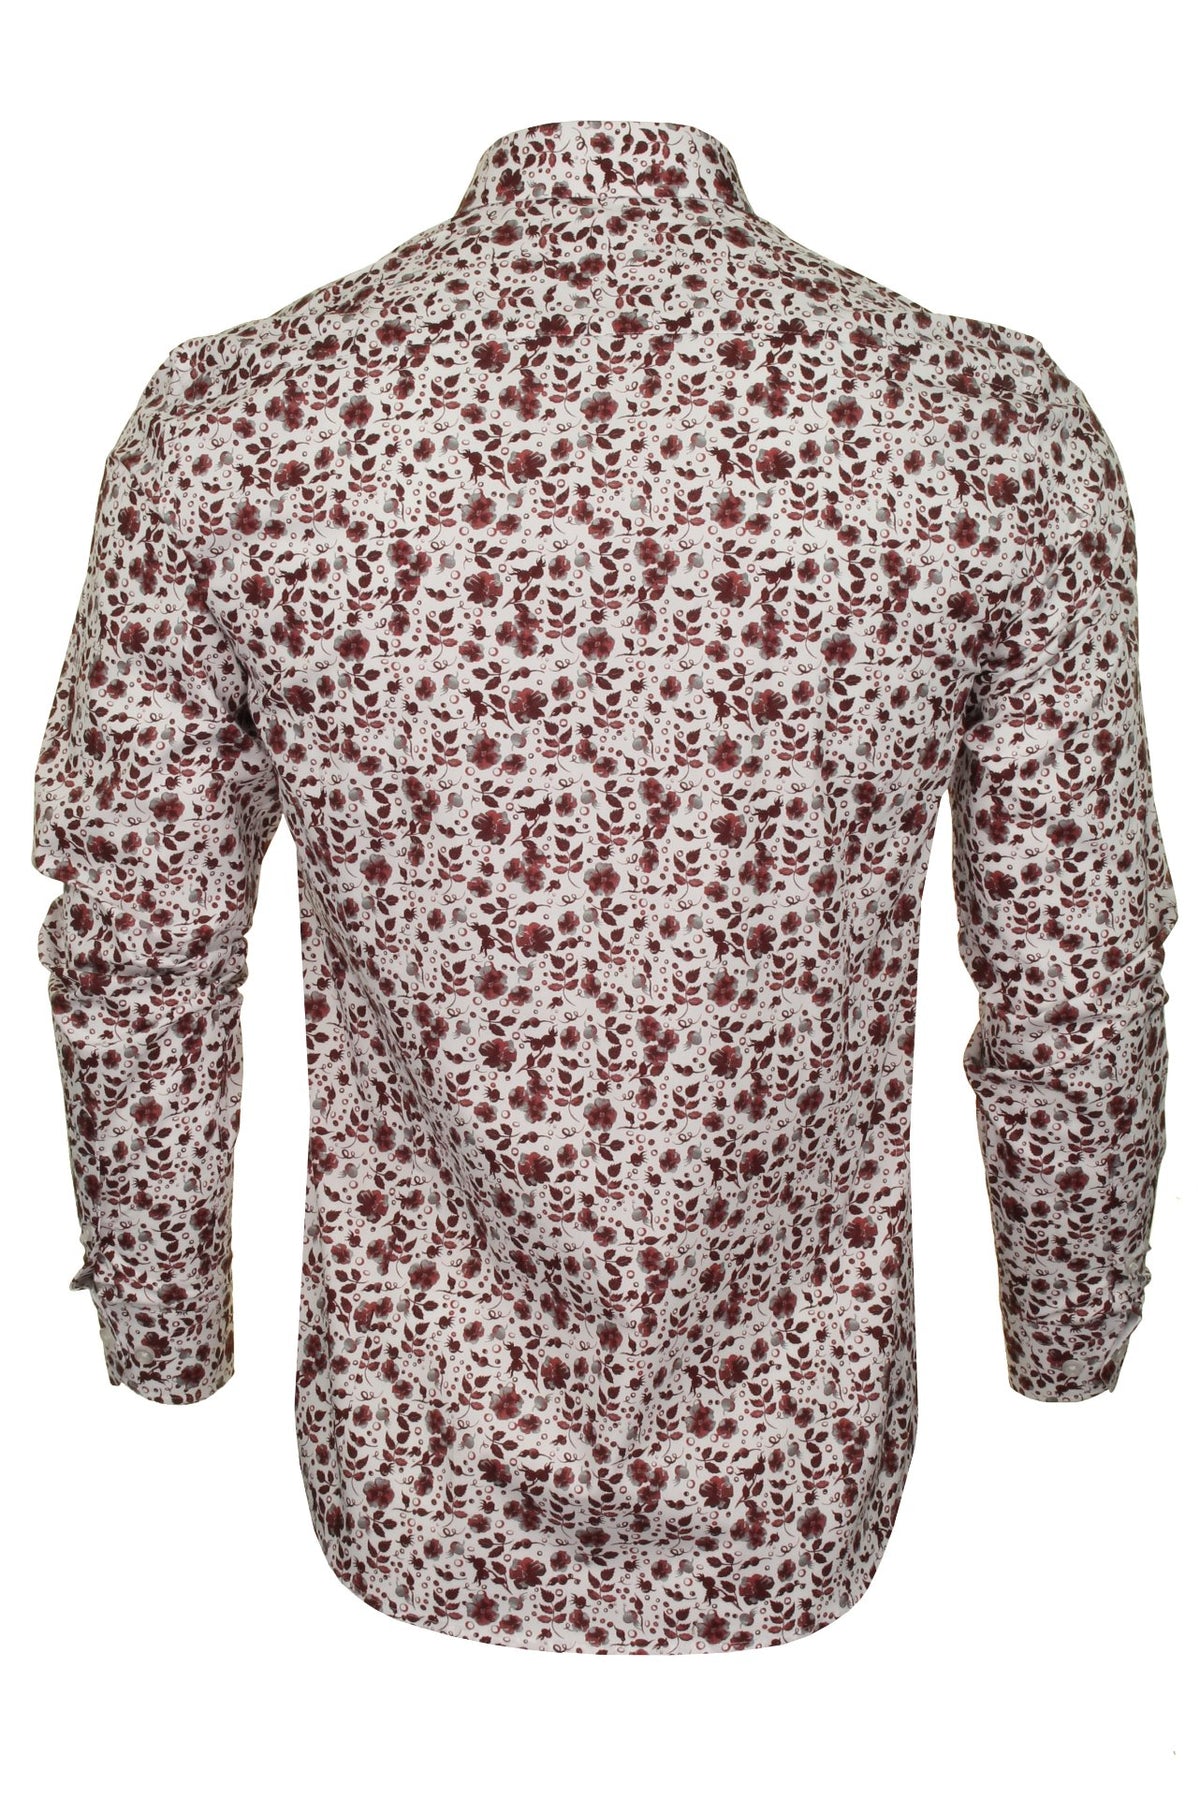 Xact Mens Floral Long Sleeved Shirt, 03, Xsh1089, White/ Burgundy